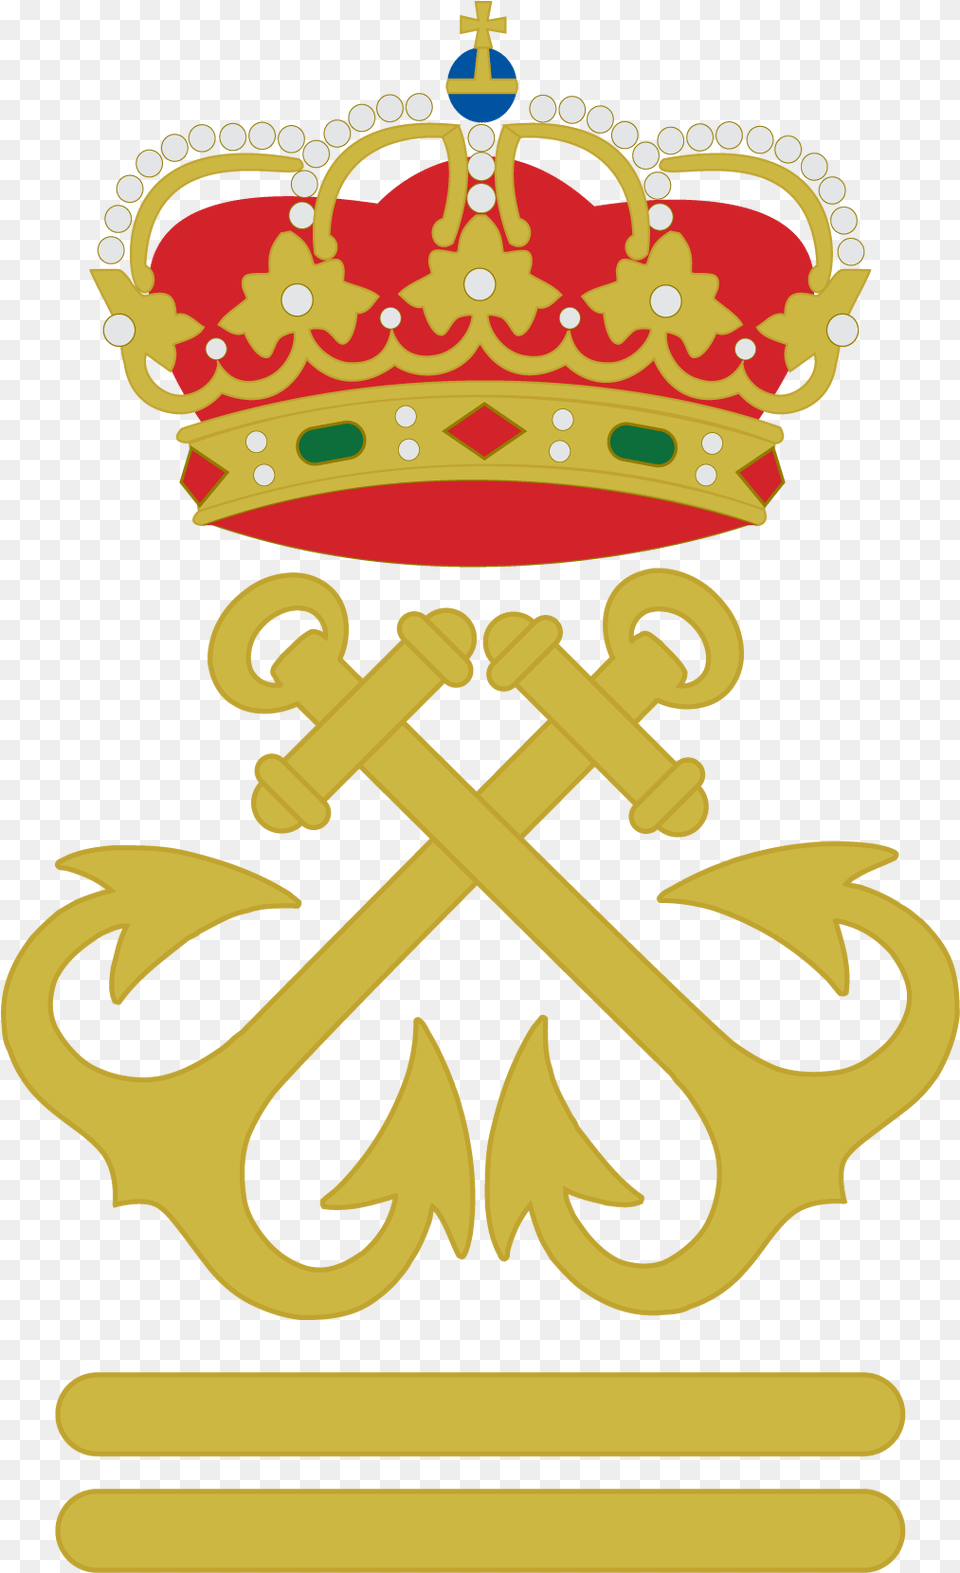 Filedistintivo De Patrn Yatepng Wikimedia Commons Spanish Heraldry Crown, Accessories, Jewelry, Emblem, Symbol Free Png Download